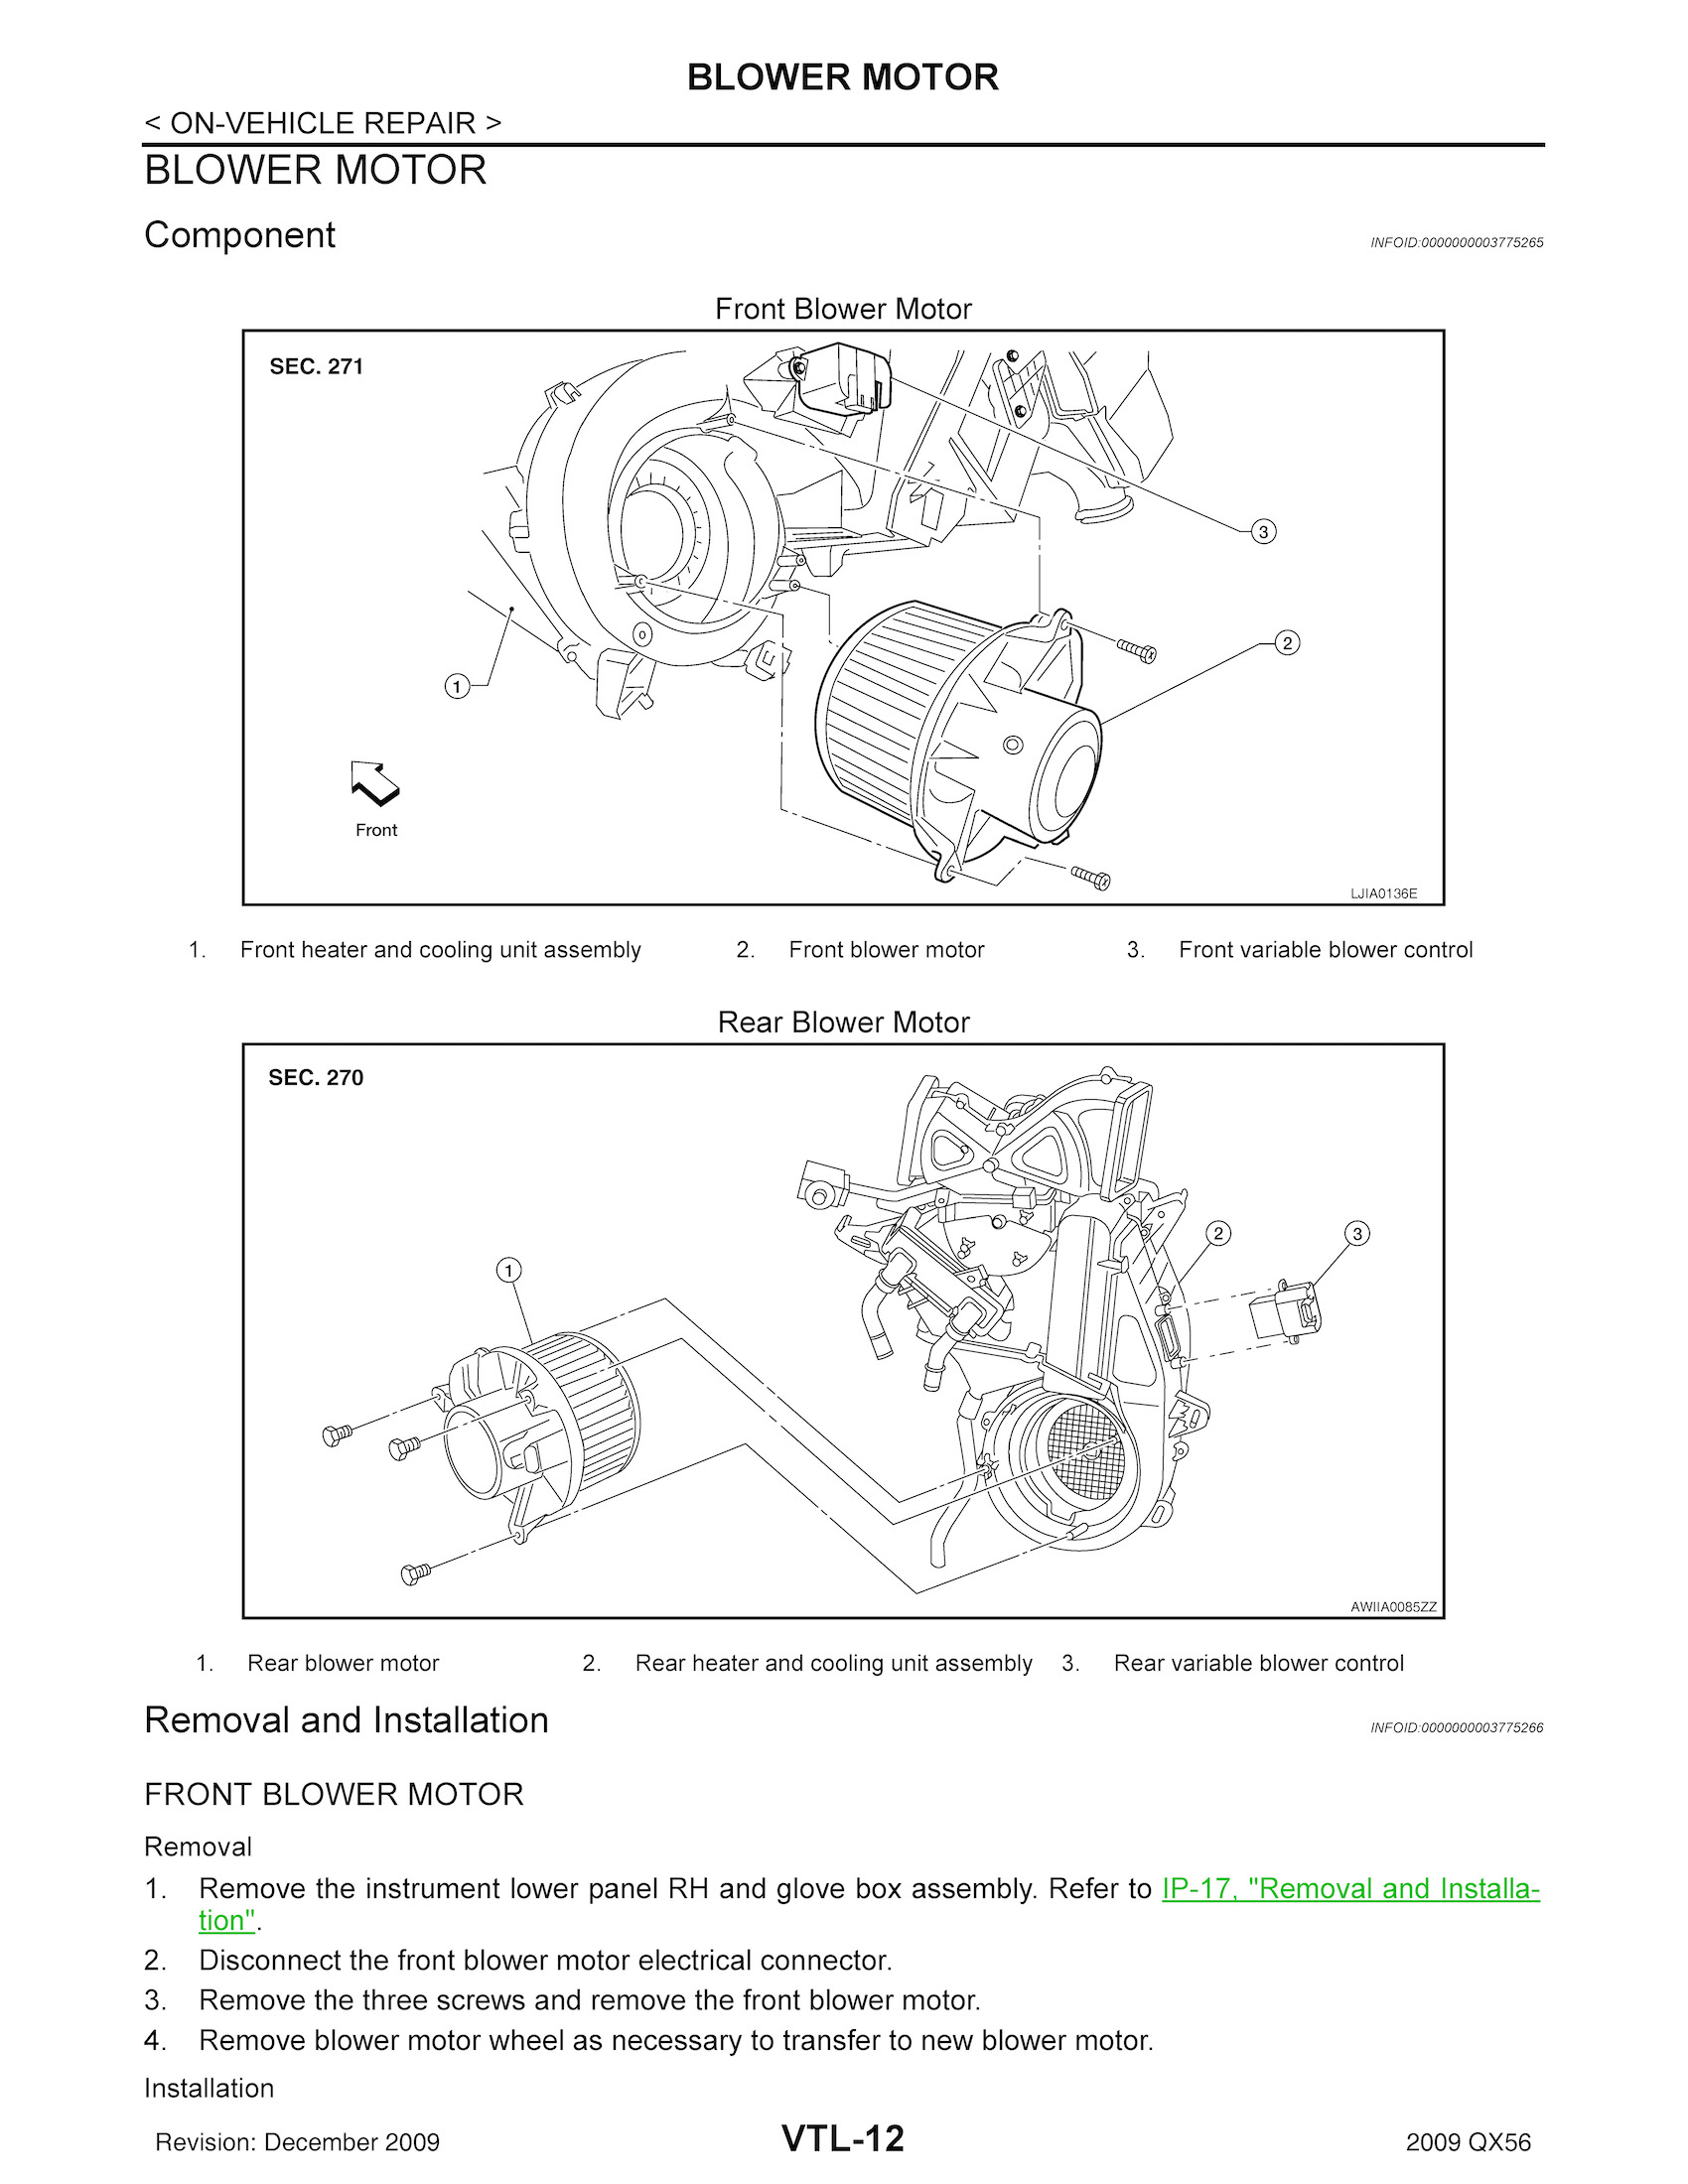 2009 Infiniti QX56 Repair Manual, Blower Motor